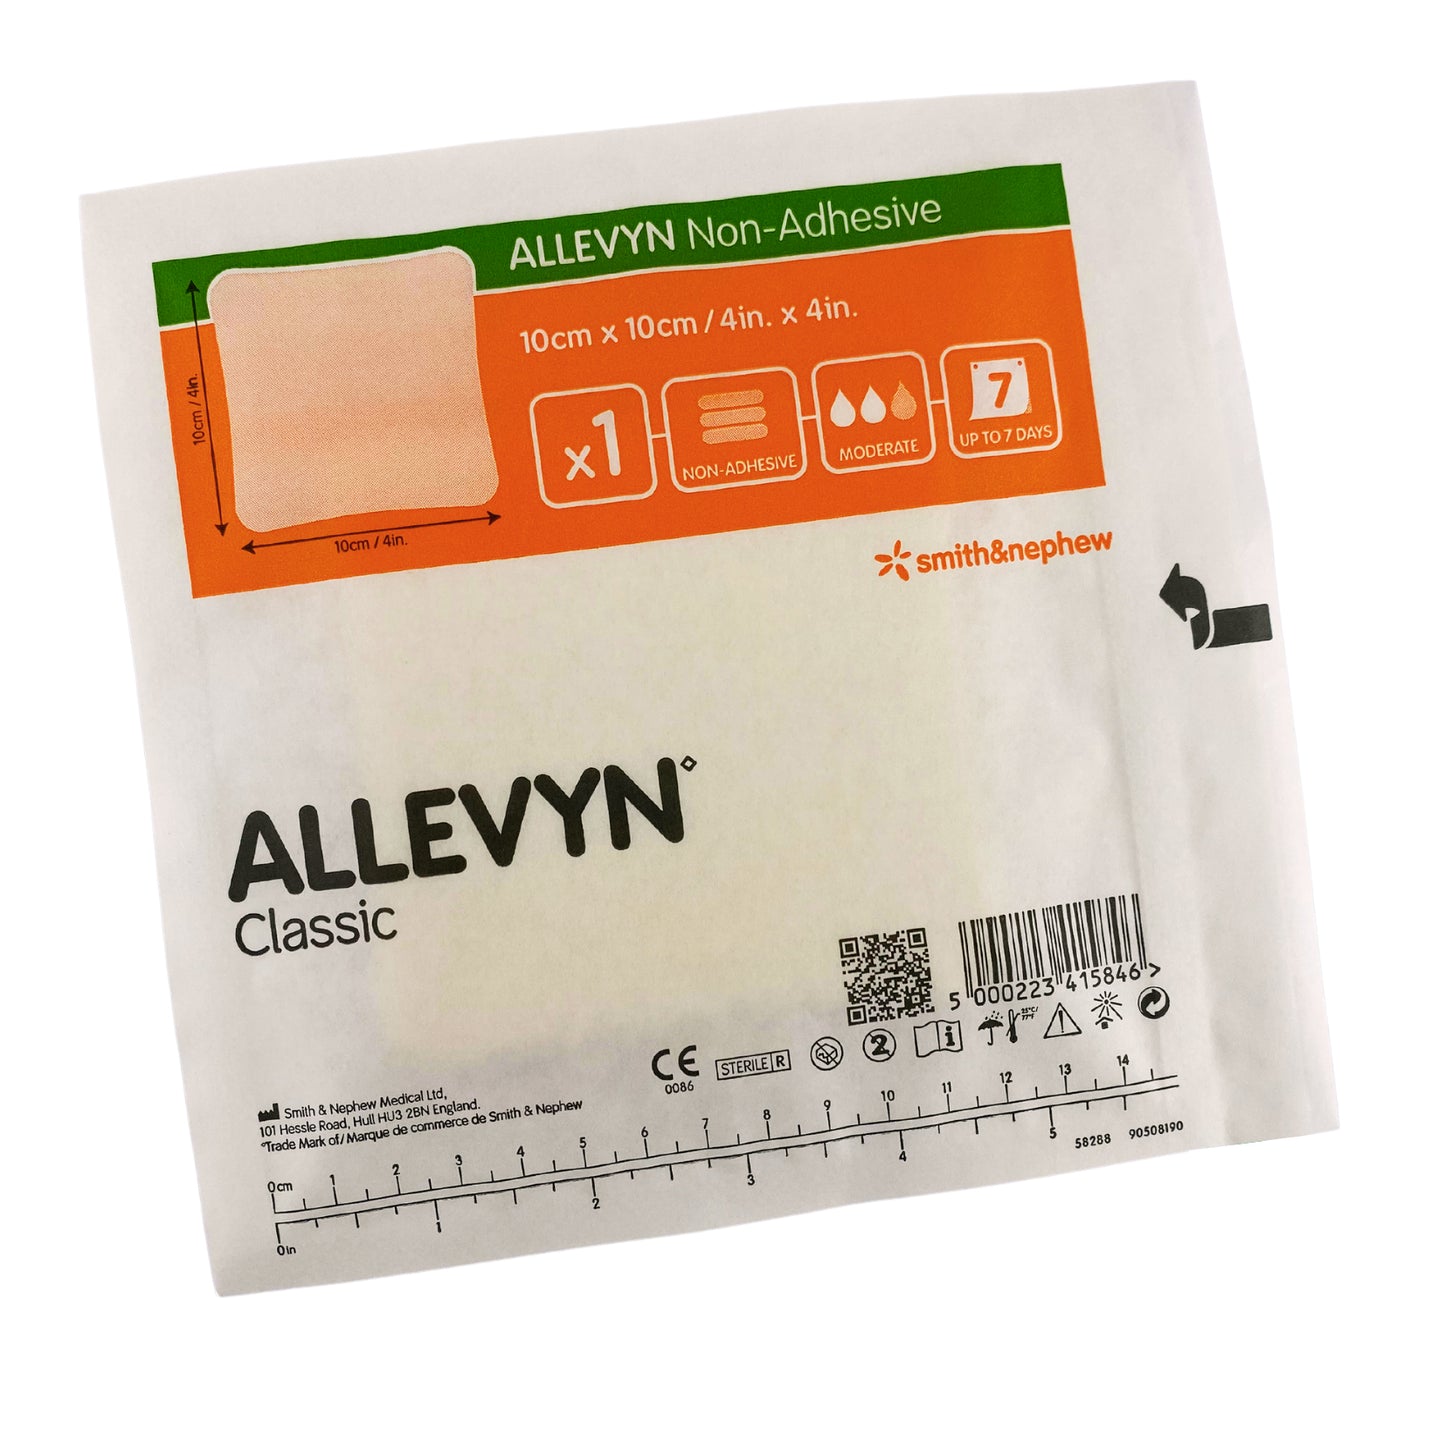 Allevyn Classic Non Adhesive Foam Dressing (1)